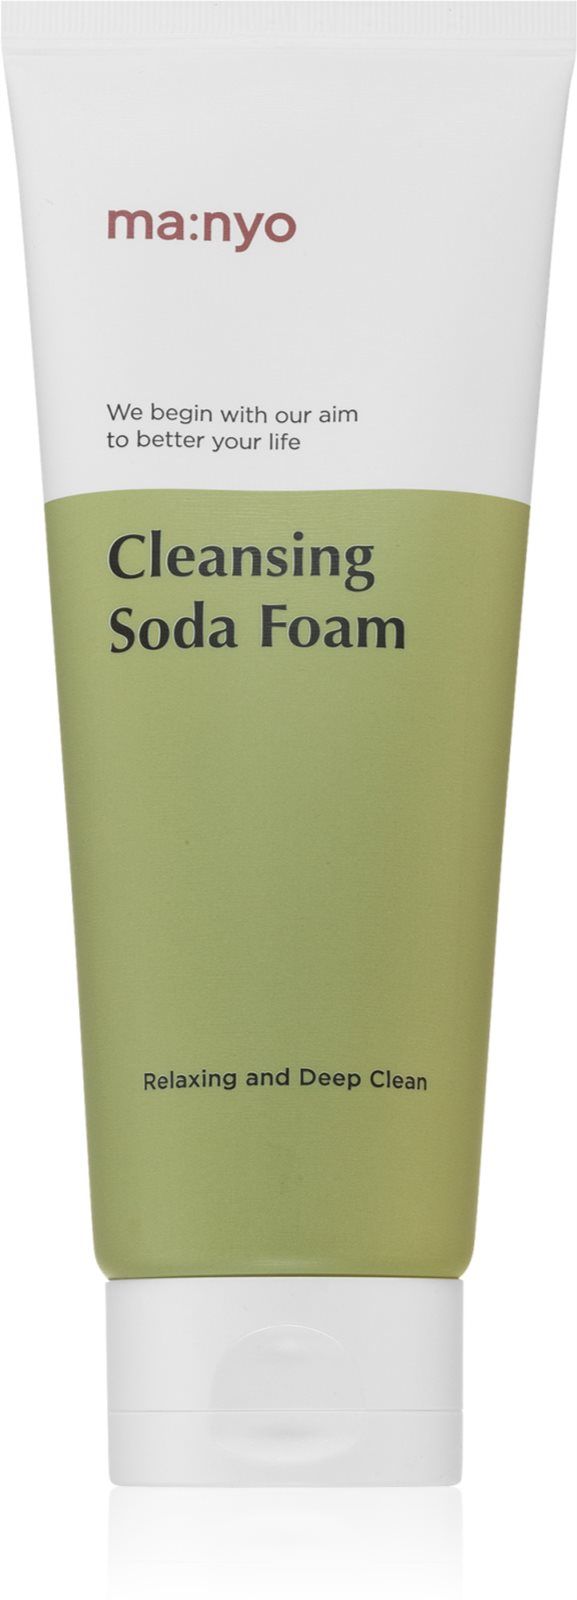 Cleansing soda foam